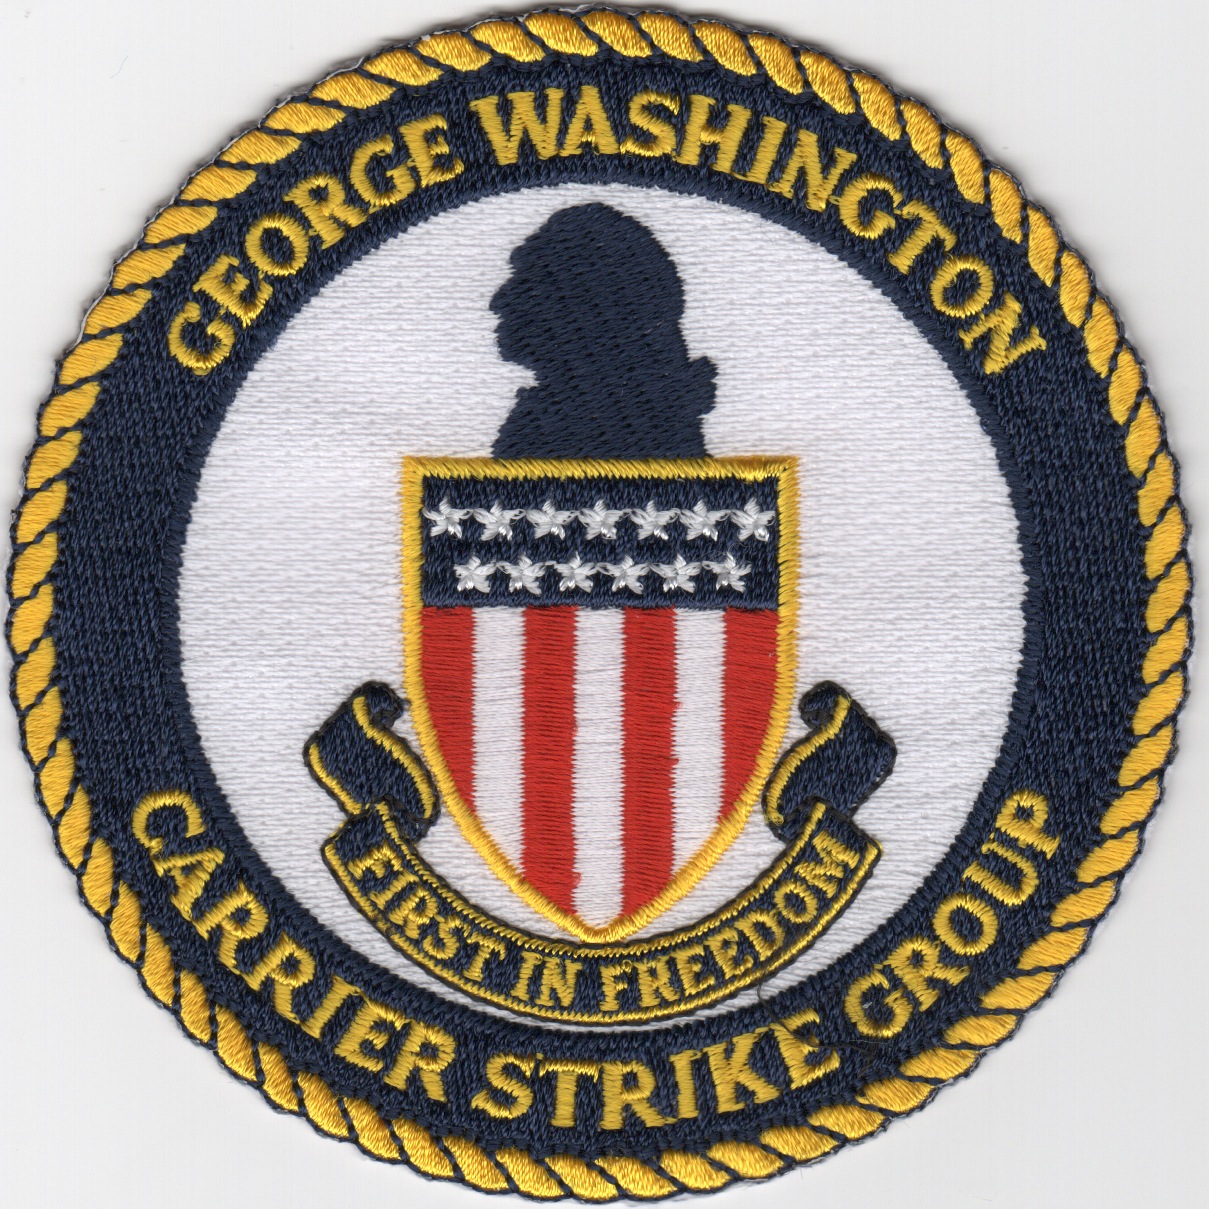 USS George Washington (CVN-73) CSG Patch